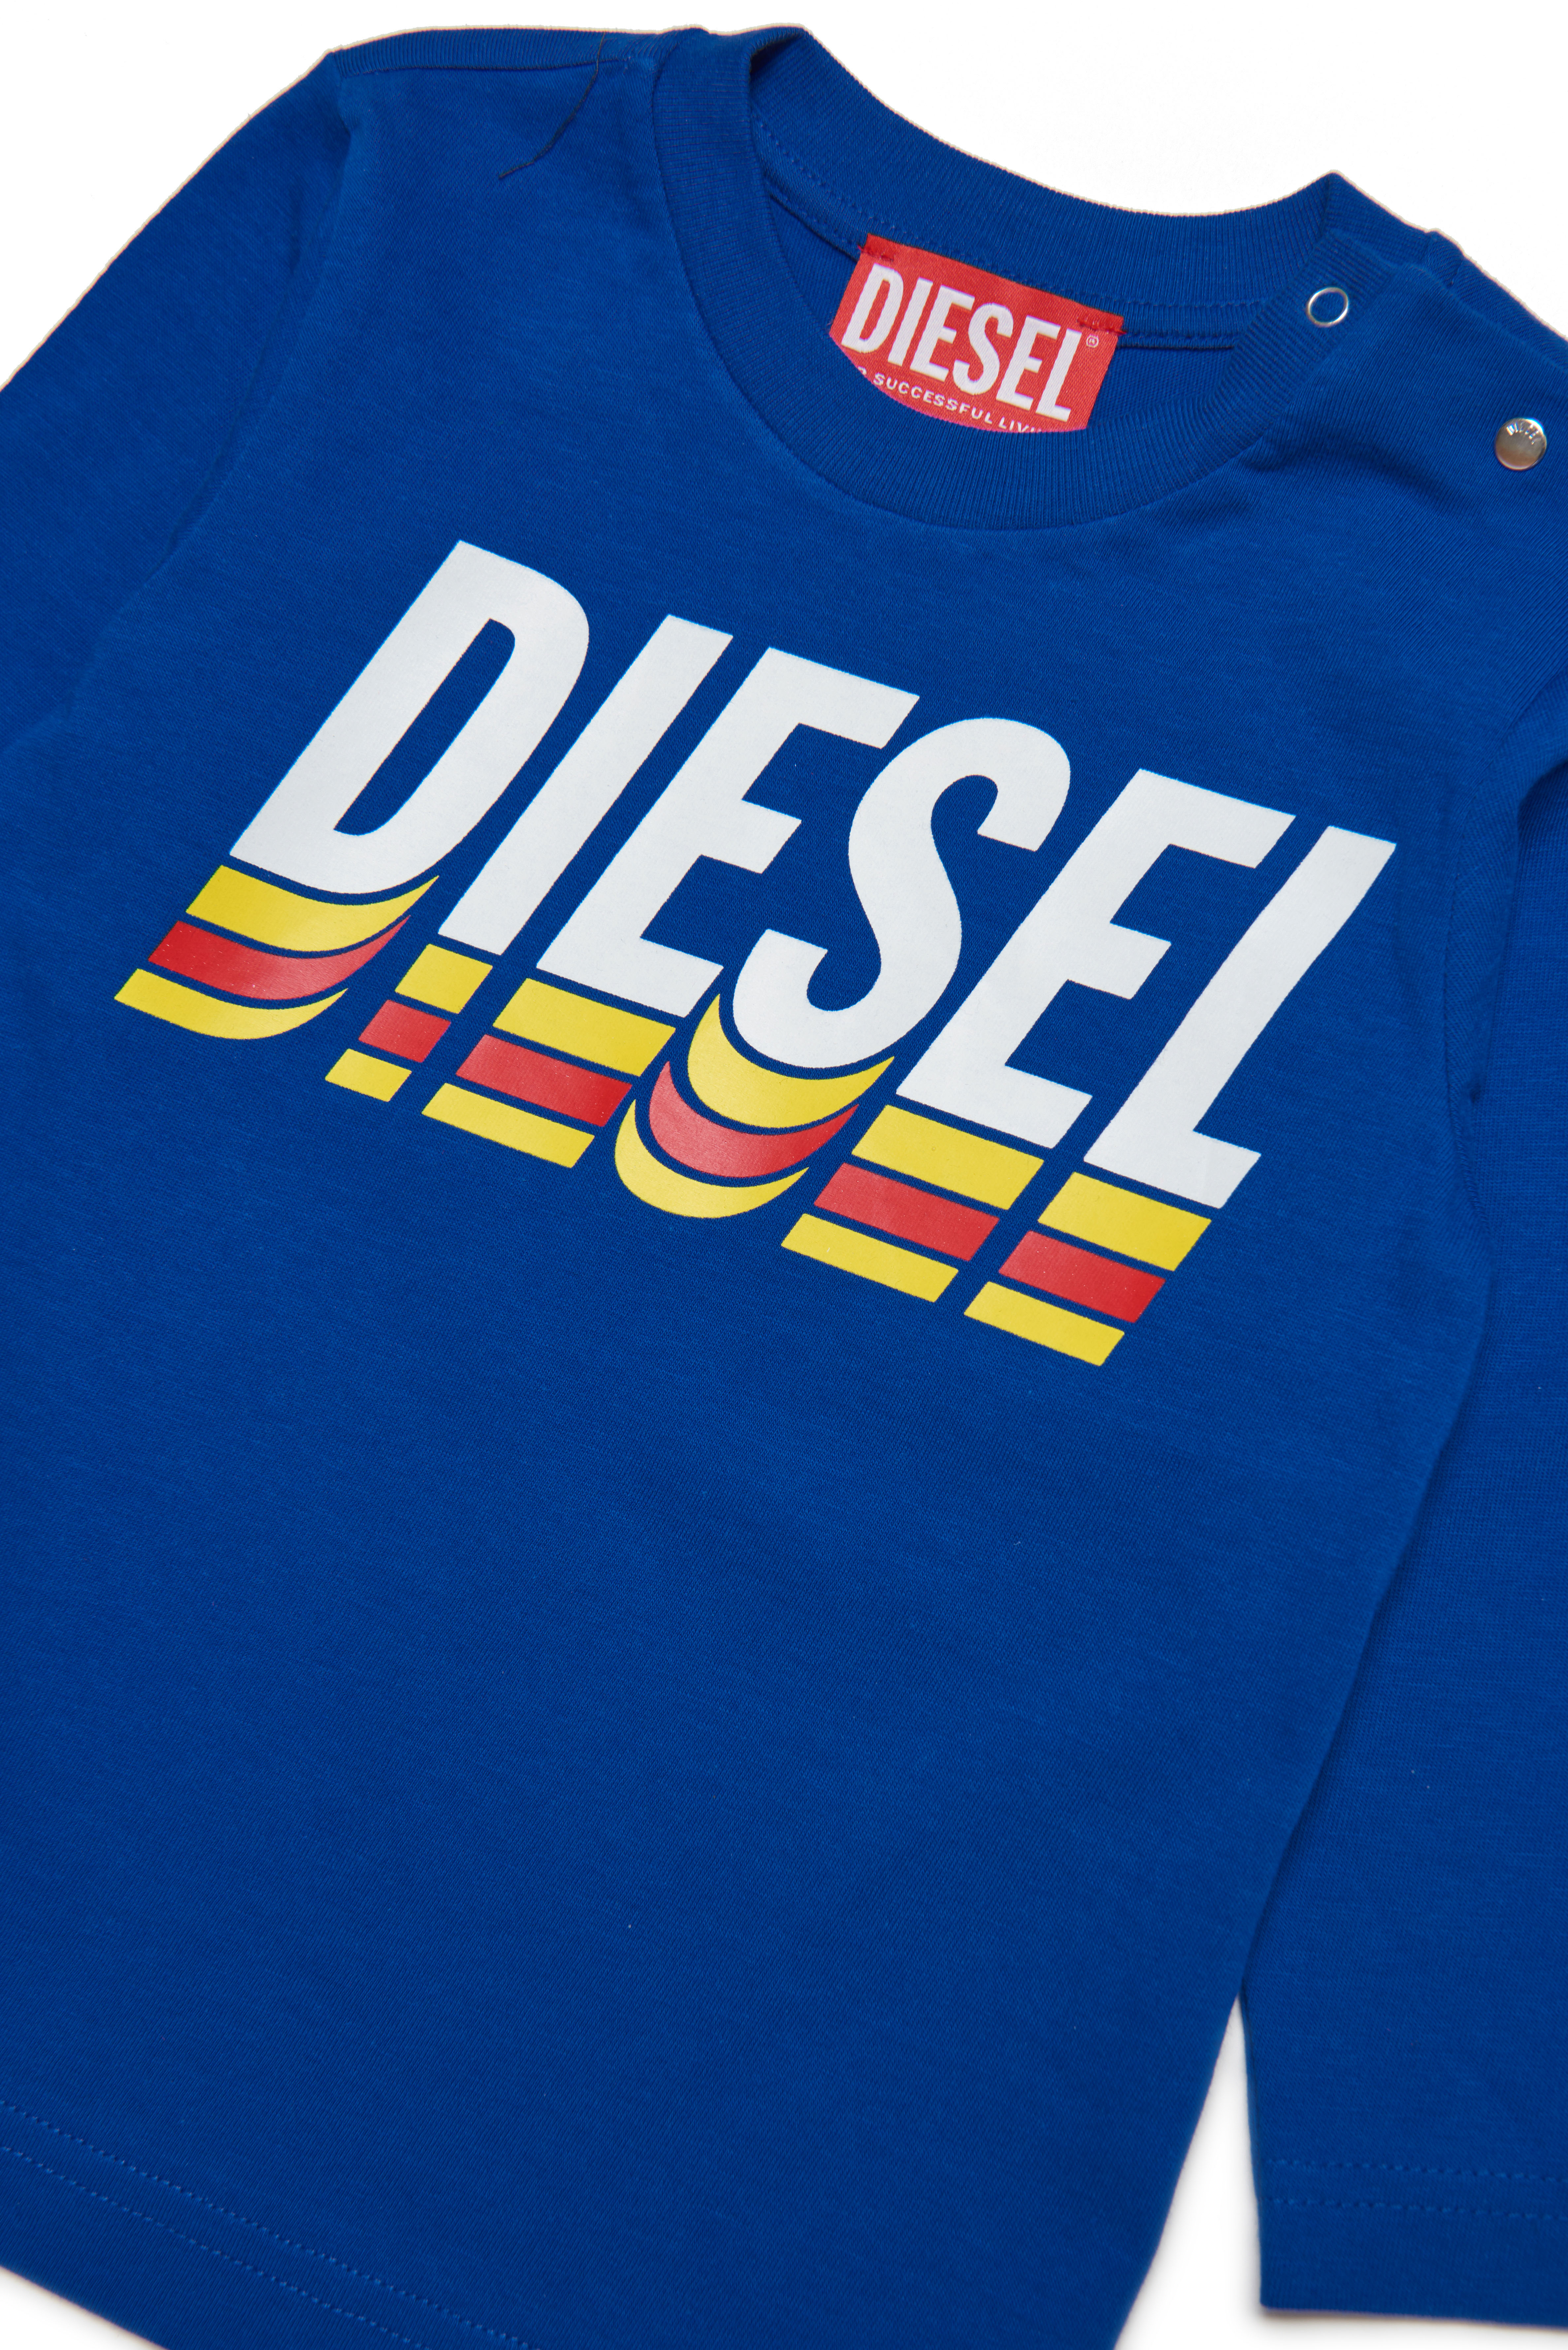 Diesel - TVASELSB, Blue - Image 3